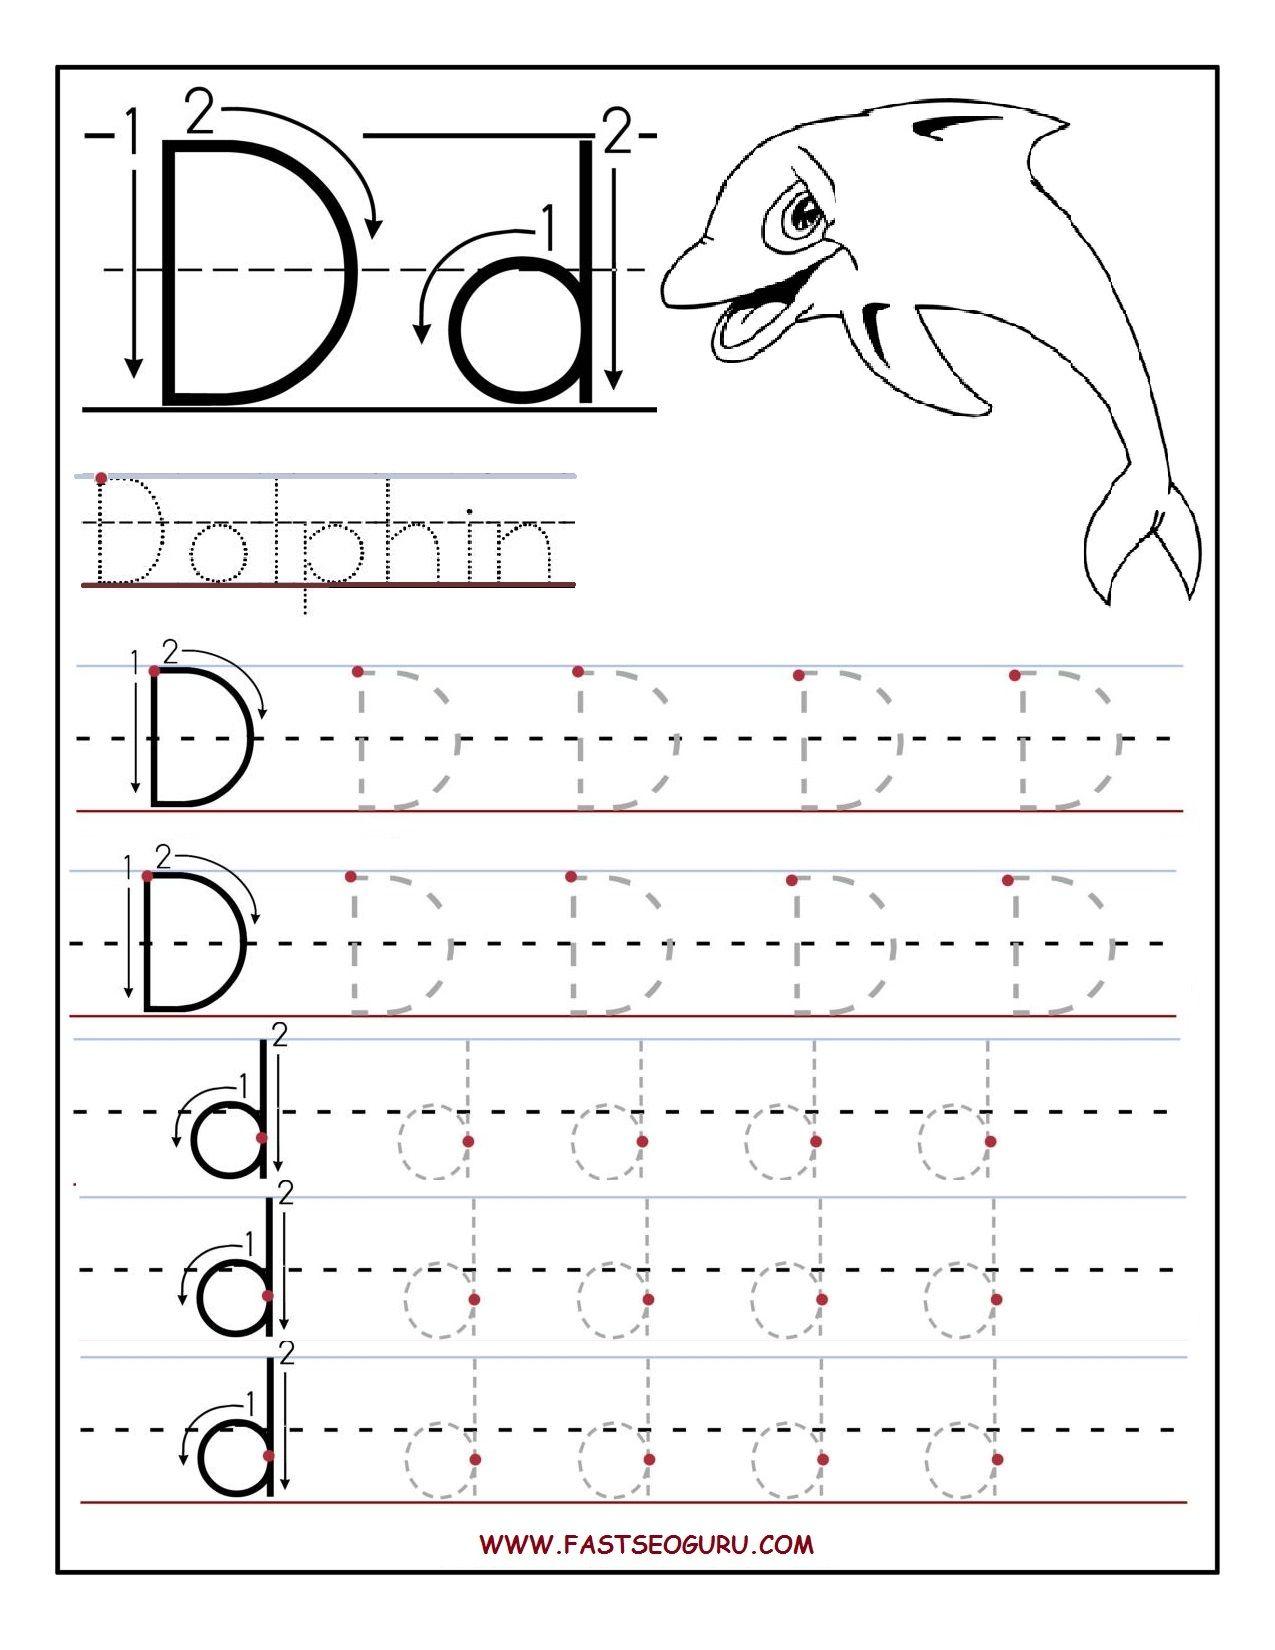 Printable Letter D Tracing Worksheets For Preschool